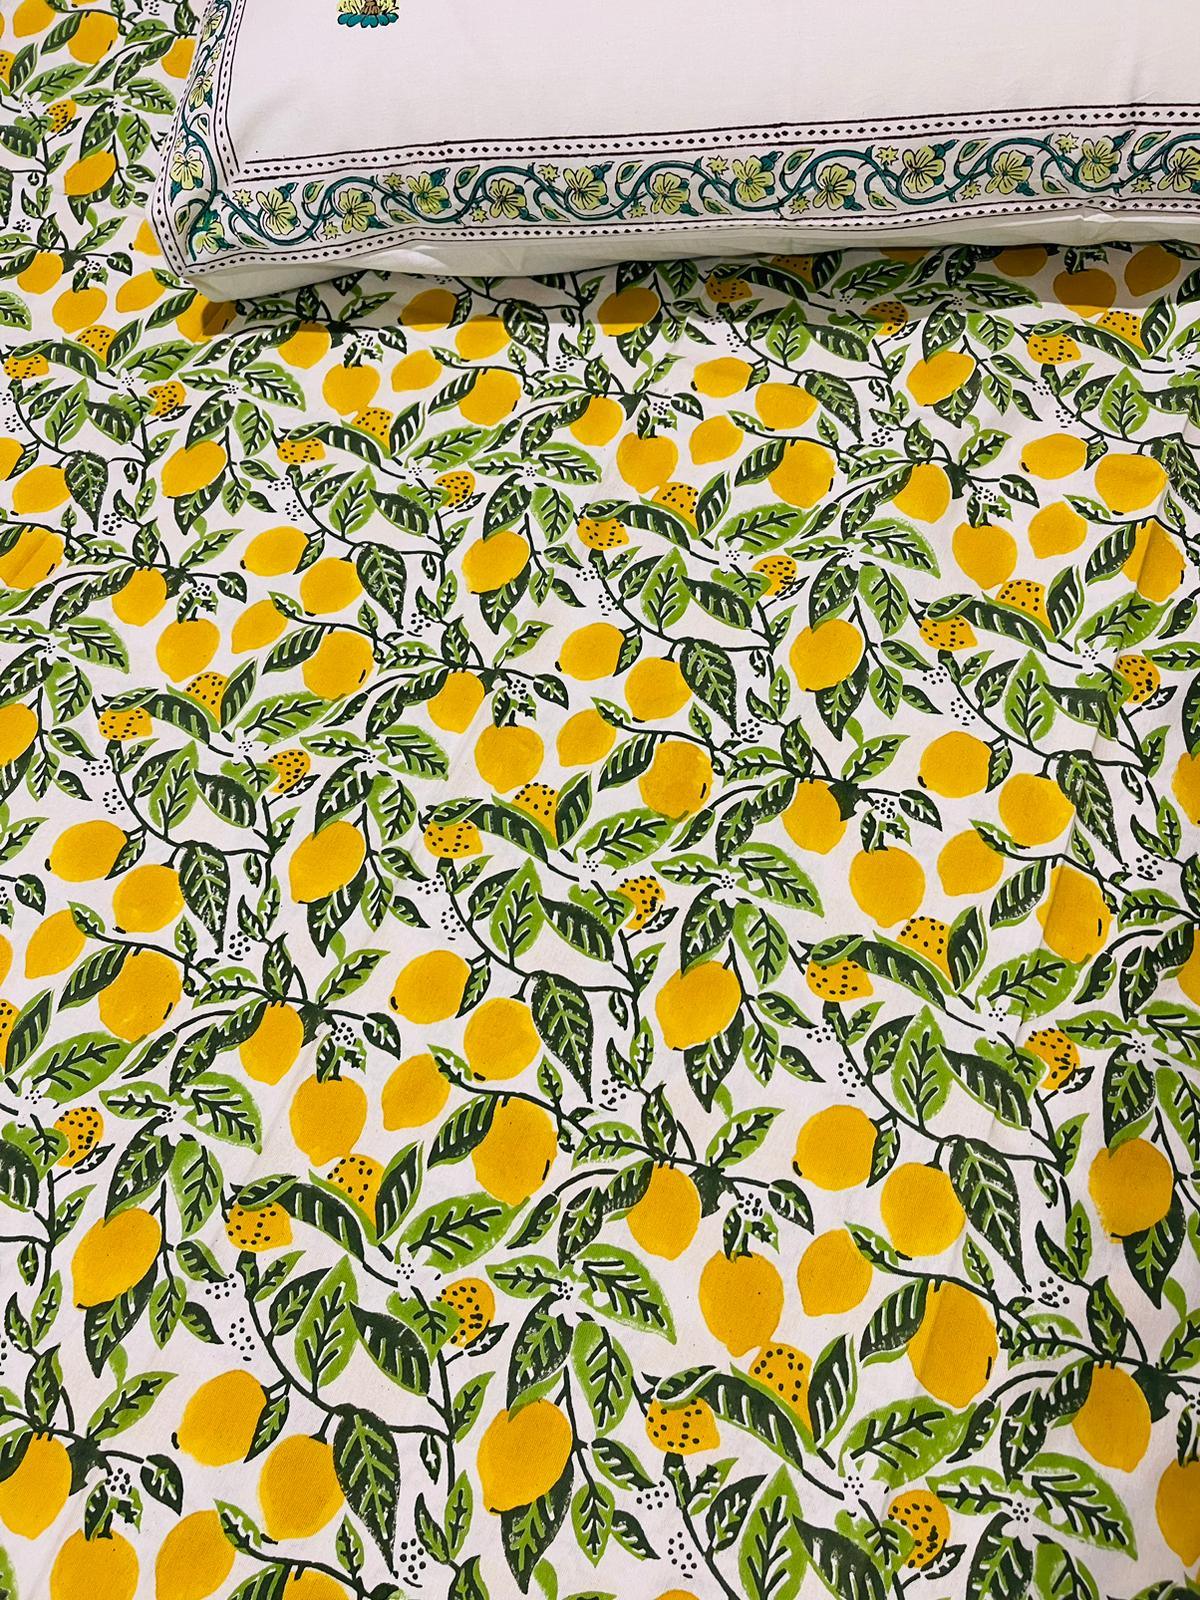 Lemon Cotton Flat sheet/Bedsheet Hand Block print Queen size - Rooii by Tuvisha